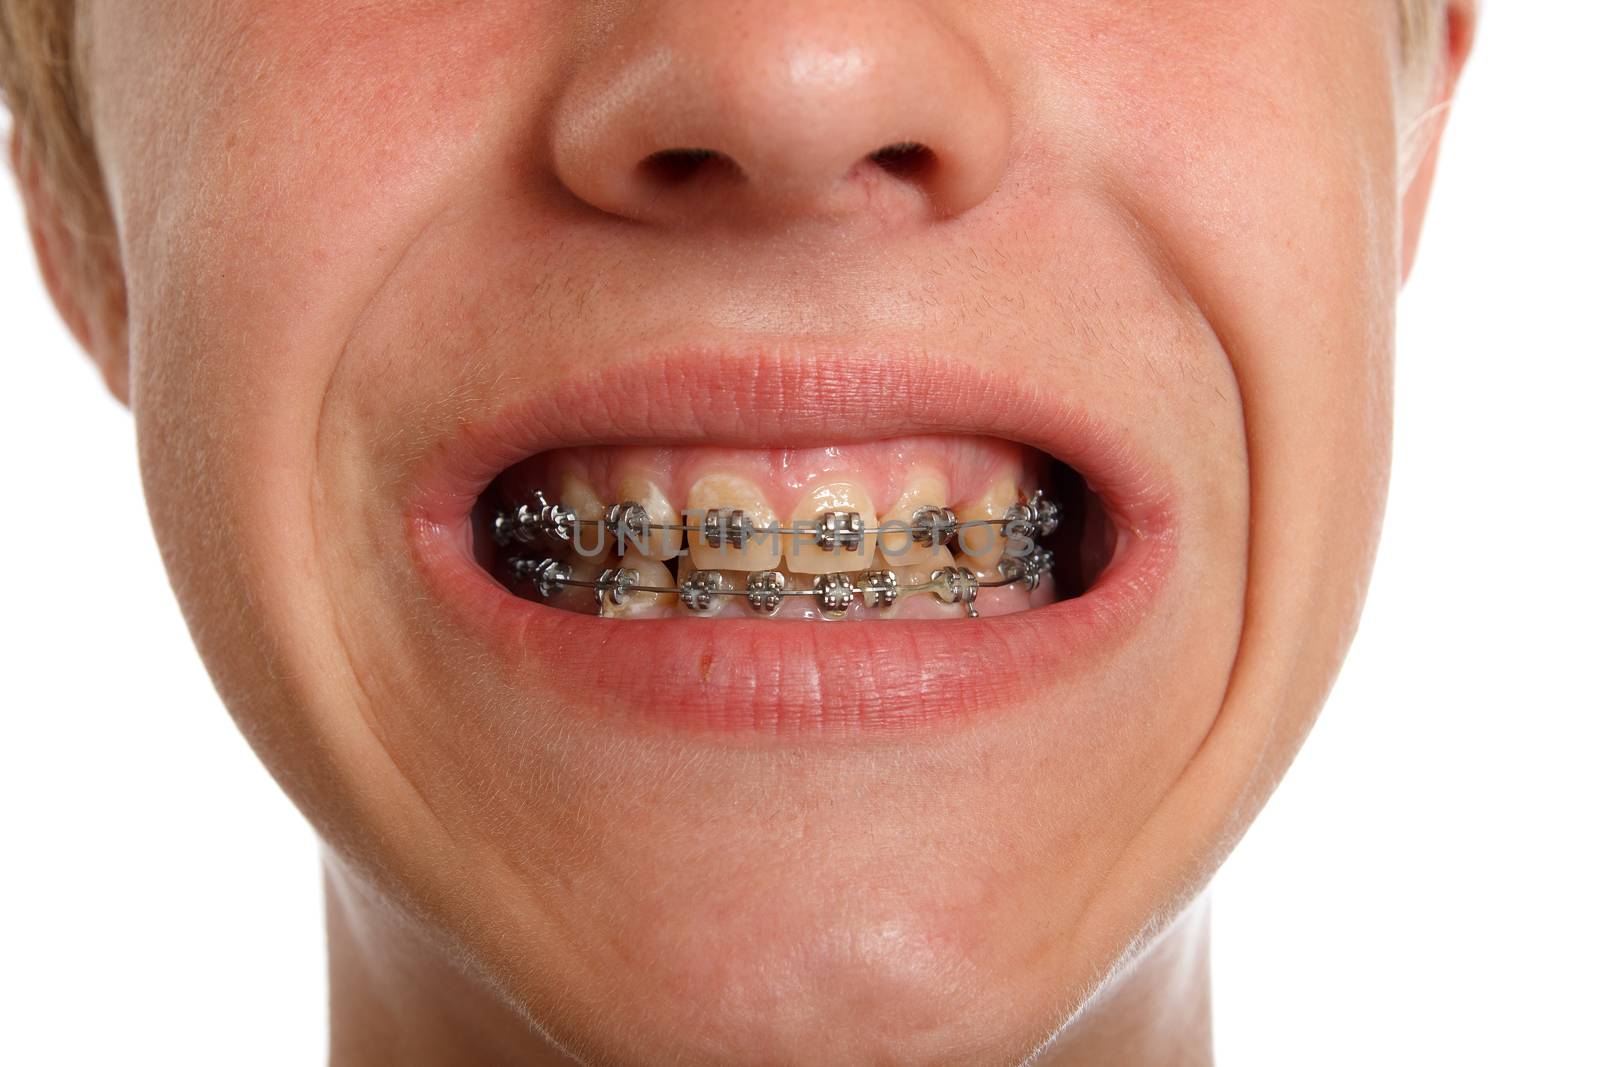 a set of teeth braces on boys teeth